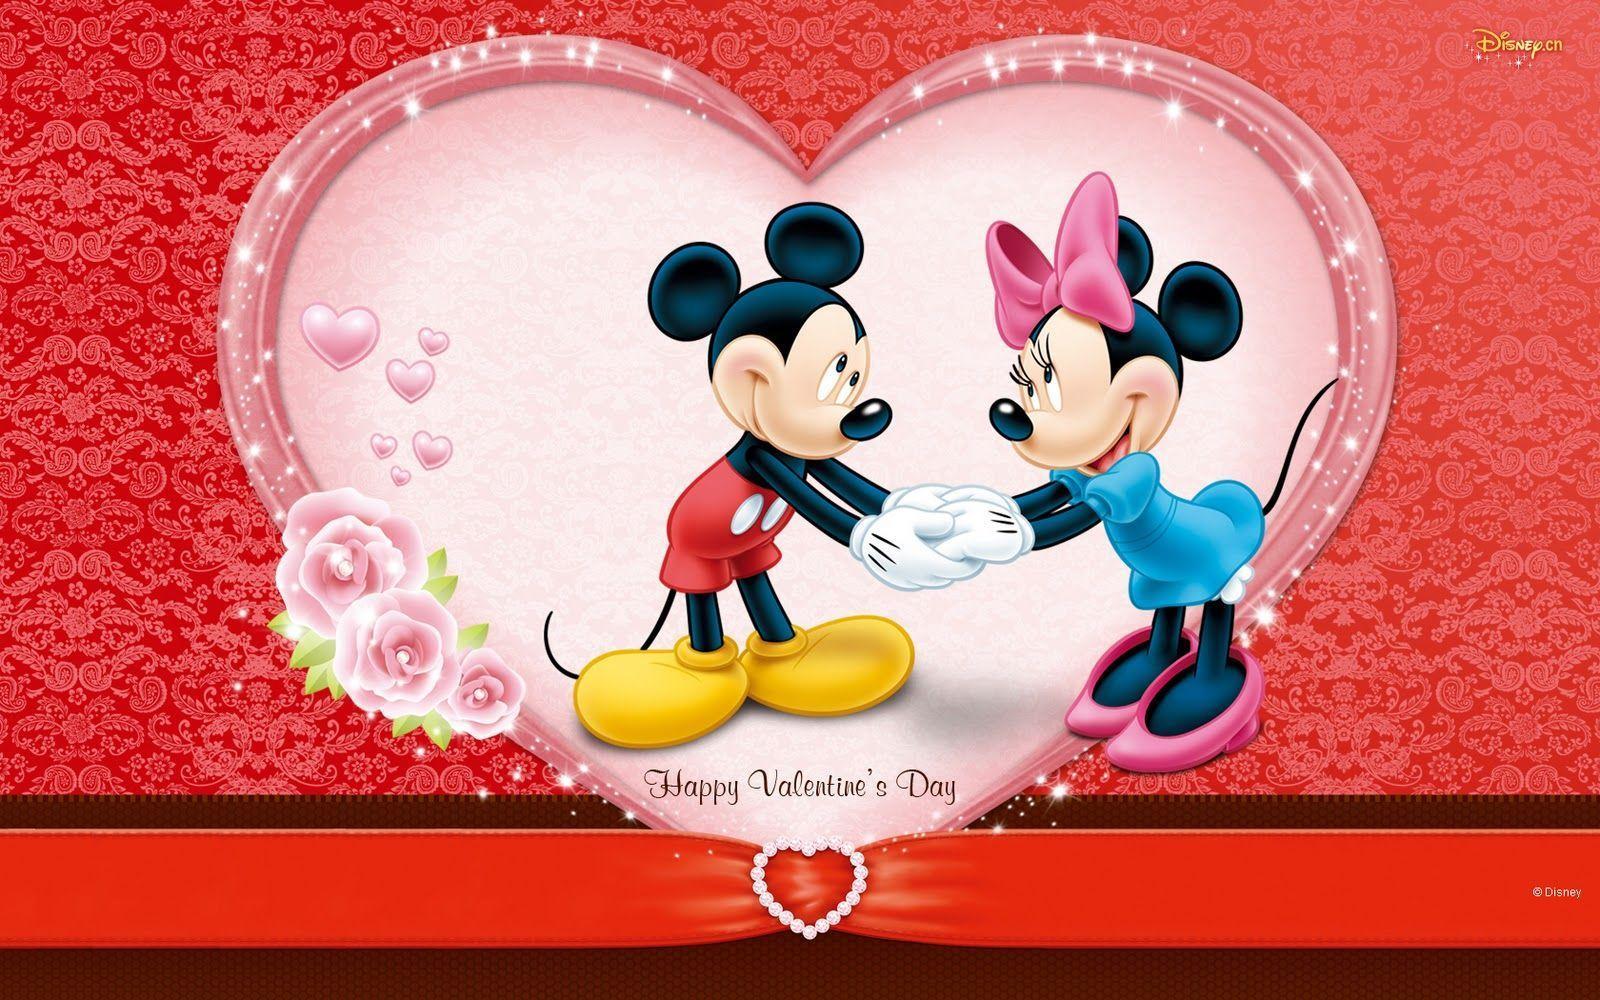 Valentines Day 2014 at Disneyland HD Wallpapers For Desktop